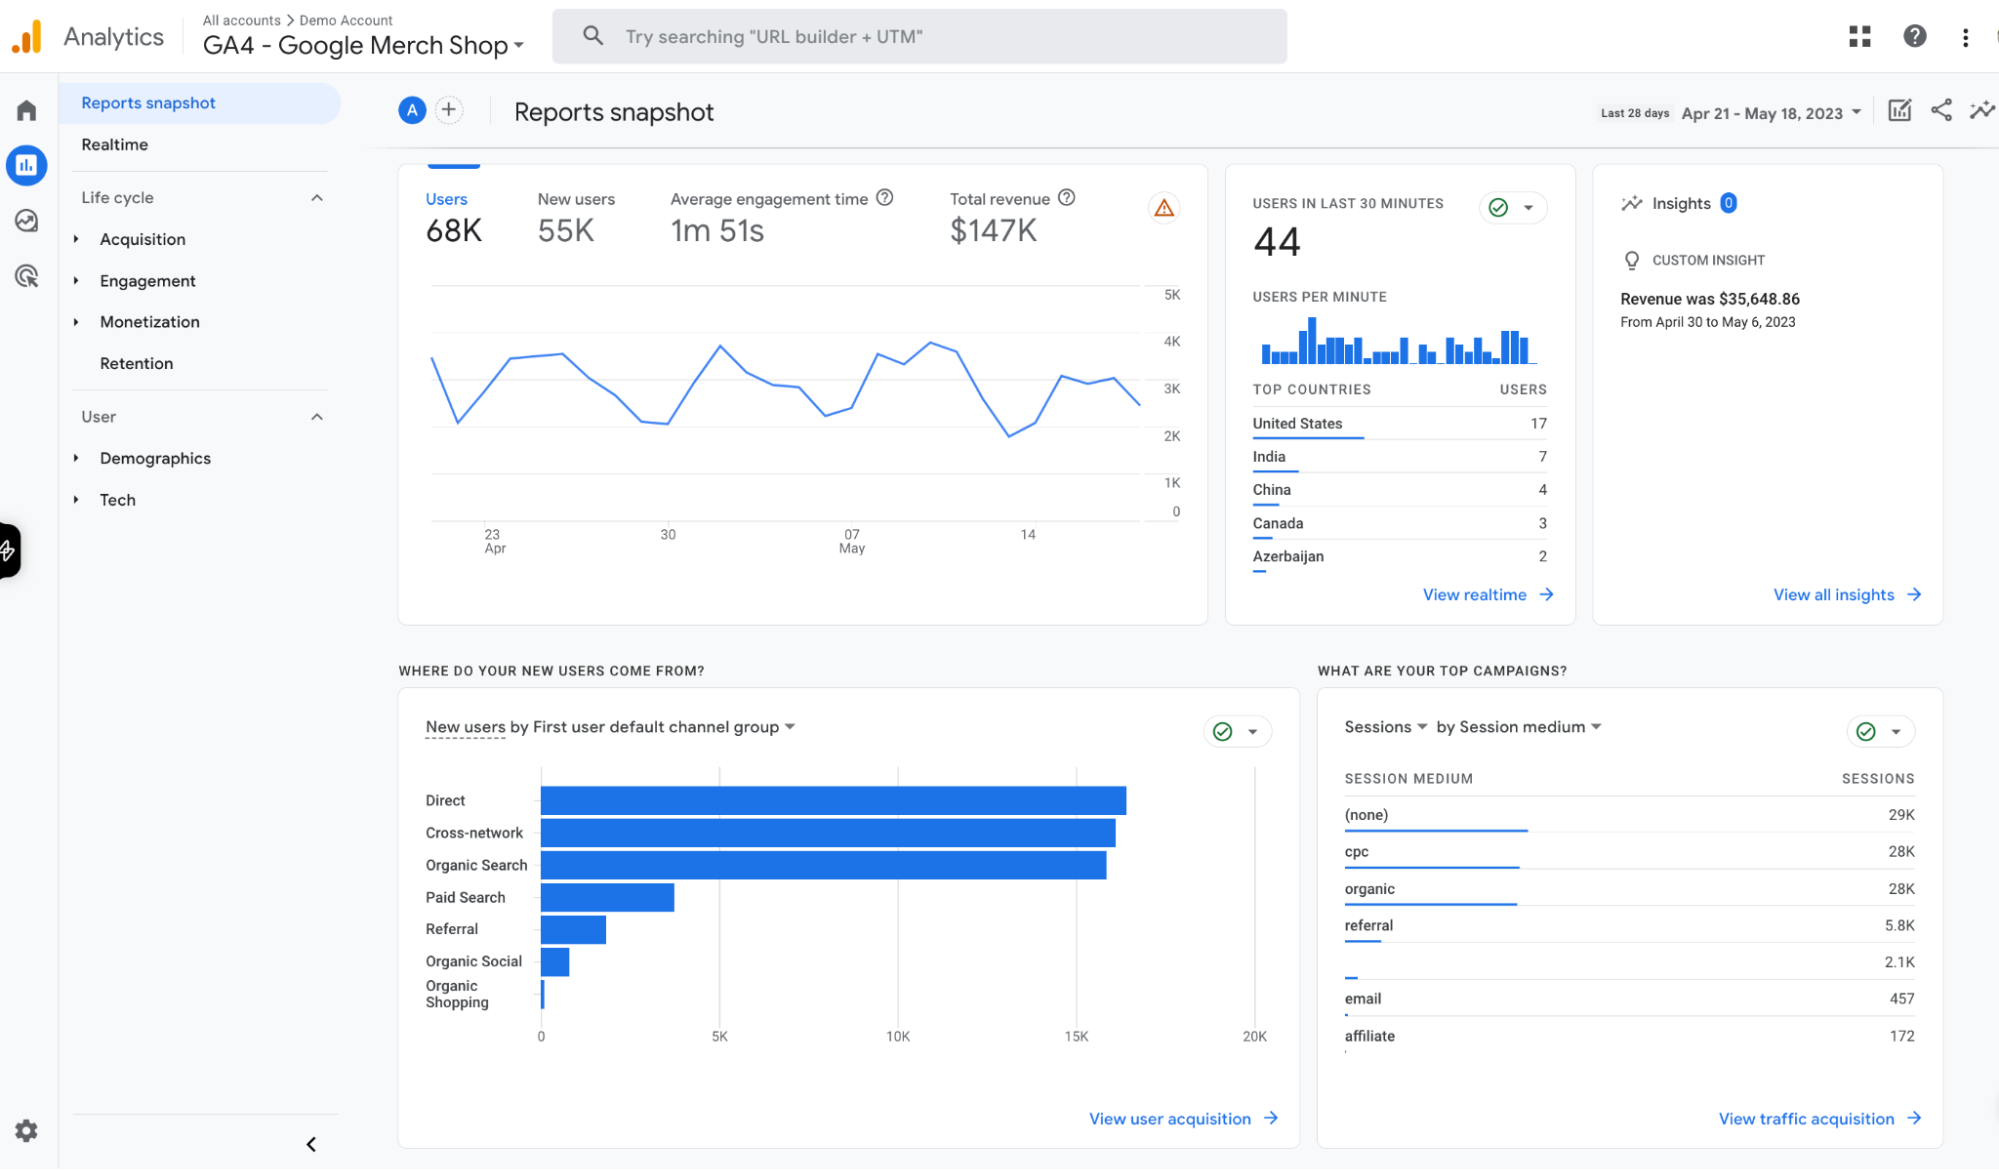 Google Analytics 4 reporting interface